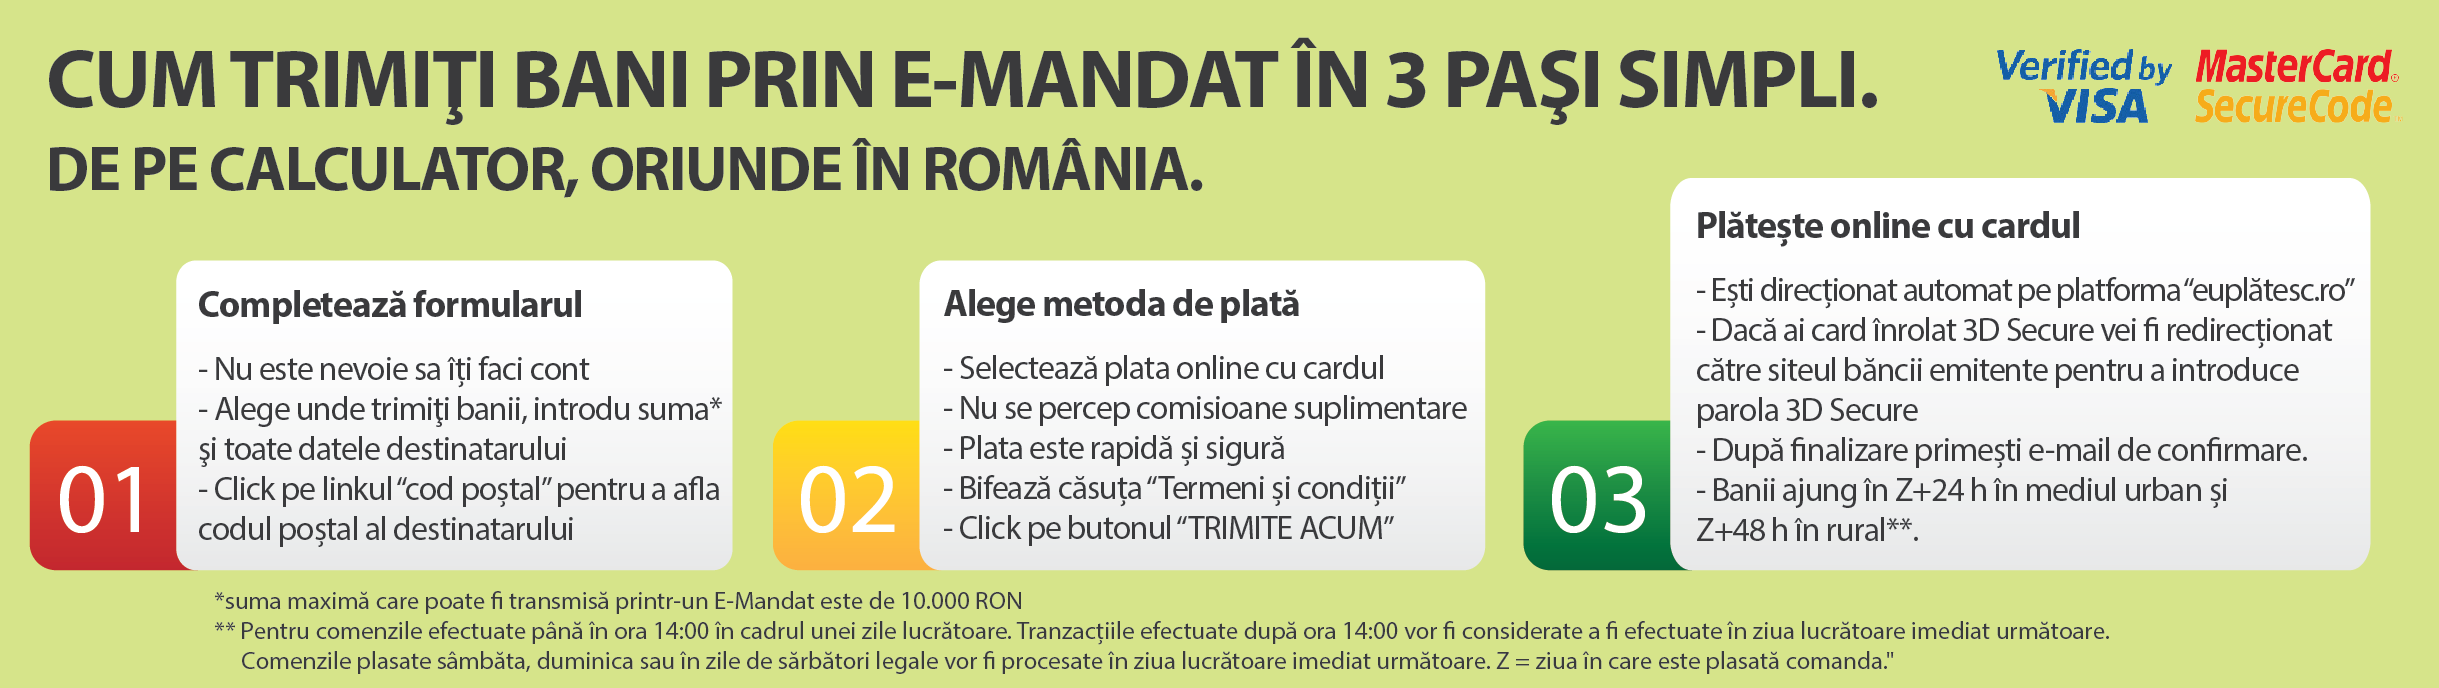 Romanian post issued money